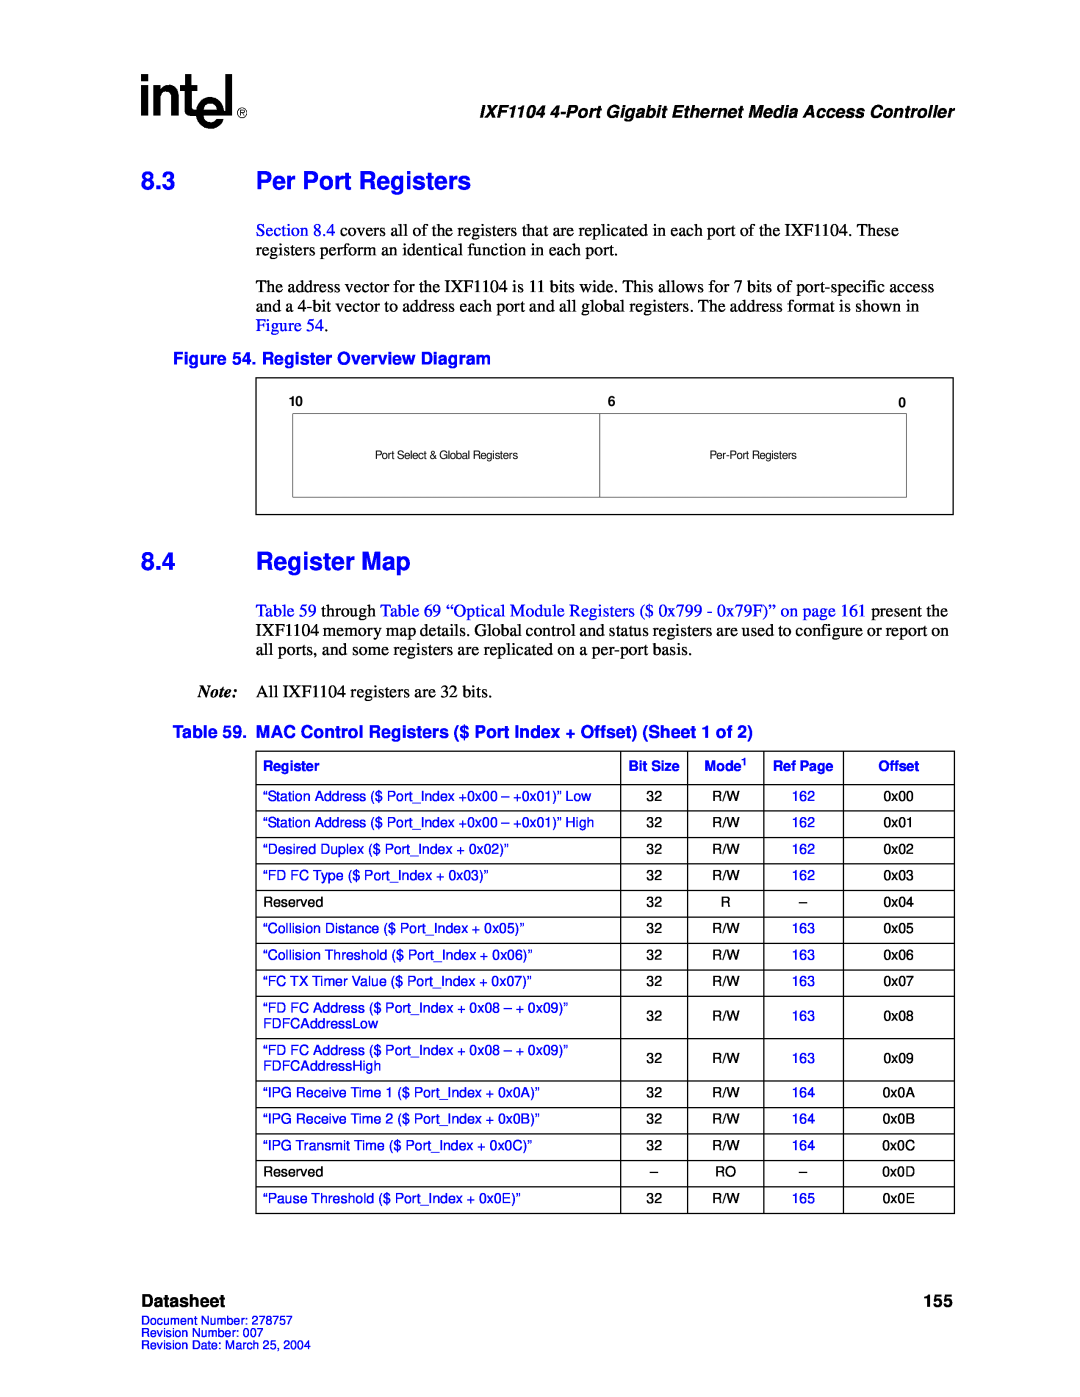 Intel IXF1104 manual 8.3Per Port Registers, 8.4Register Map, Datasheet 